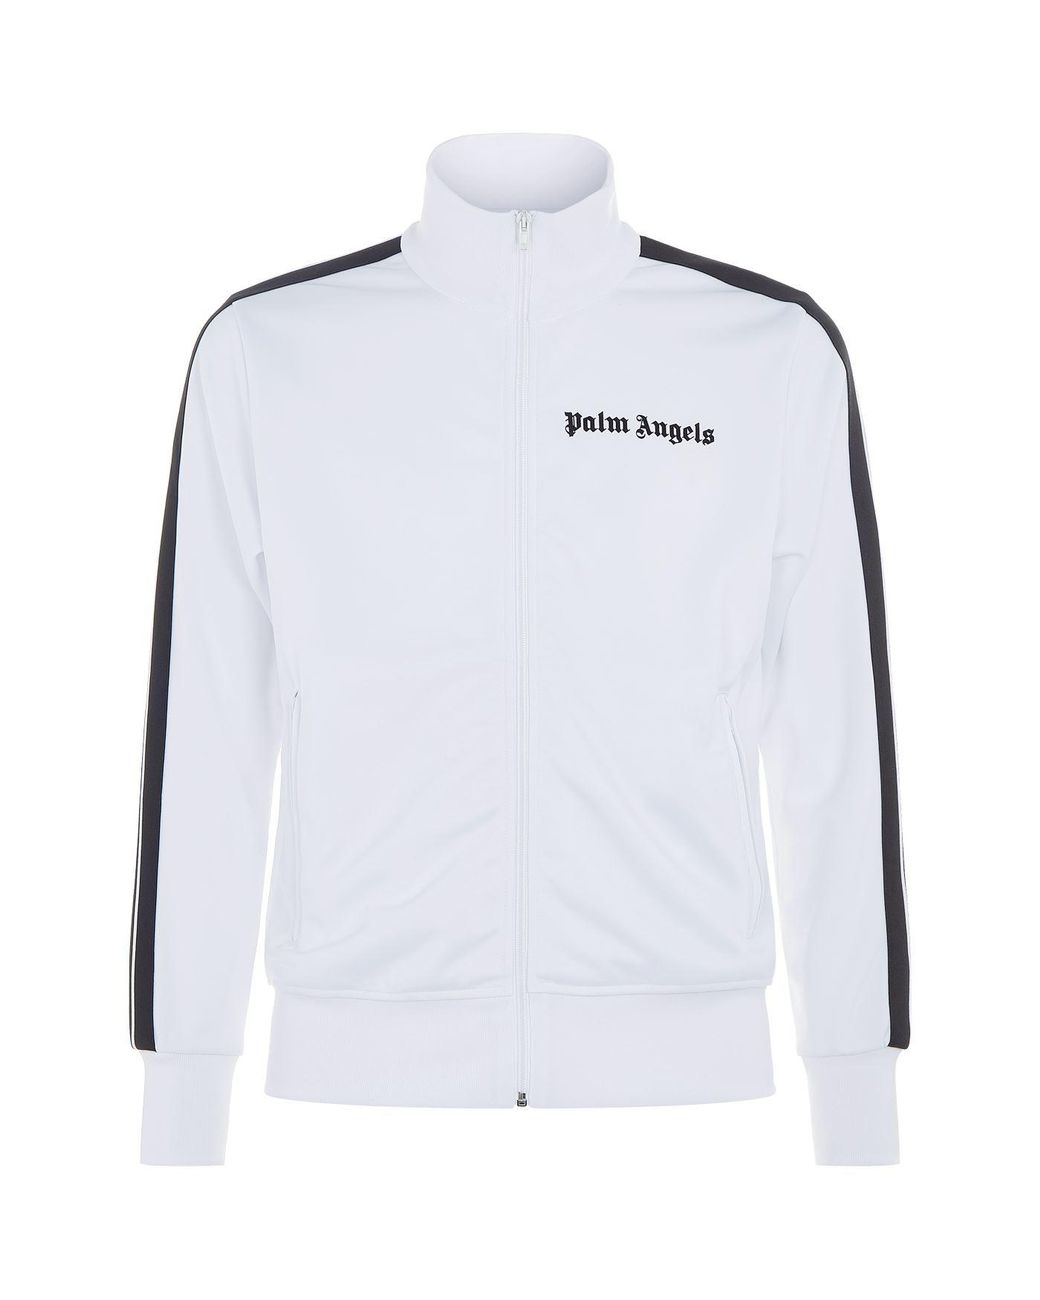 Palm Angels Logo Track Jacket in White for Men